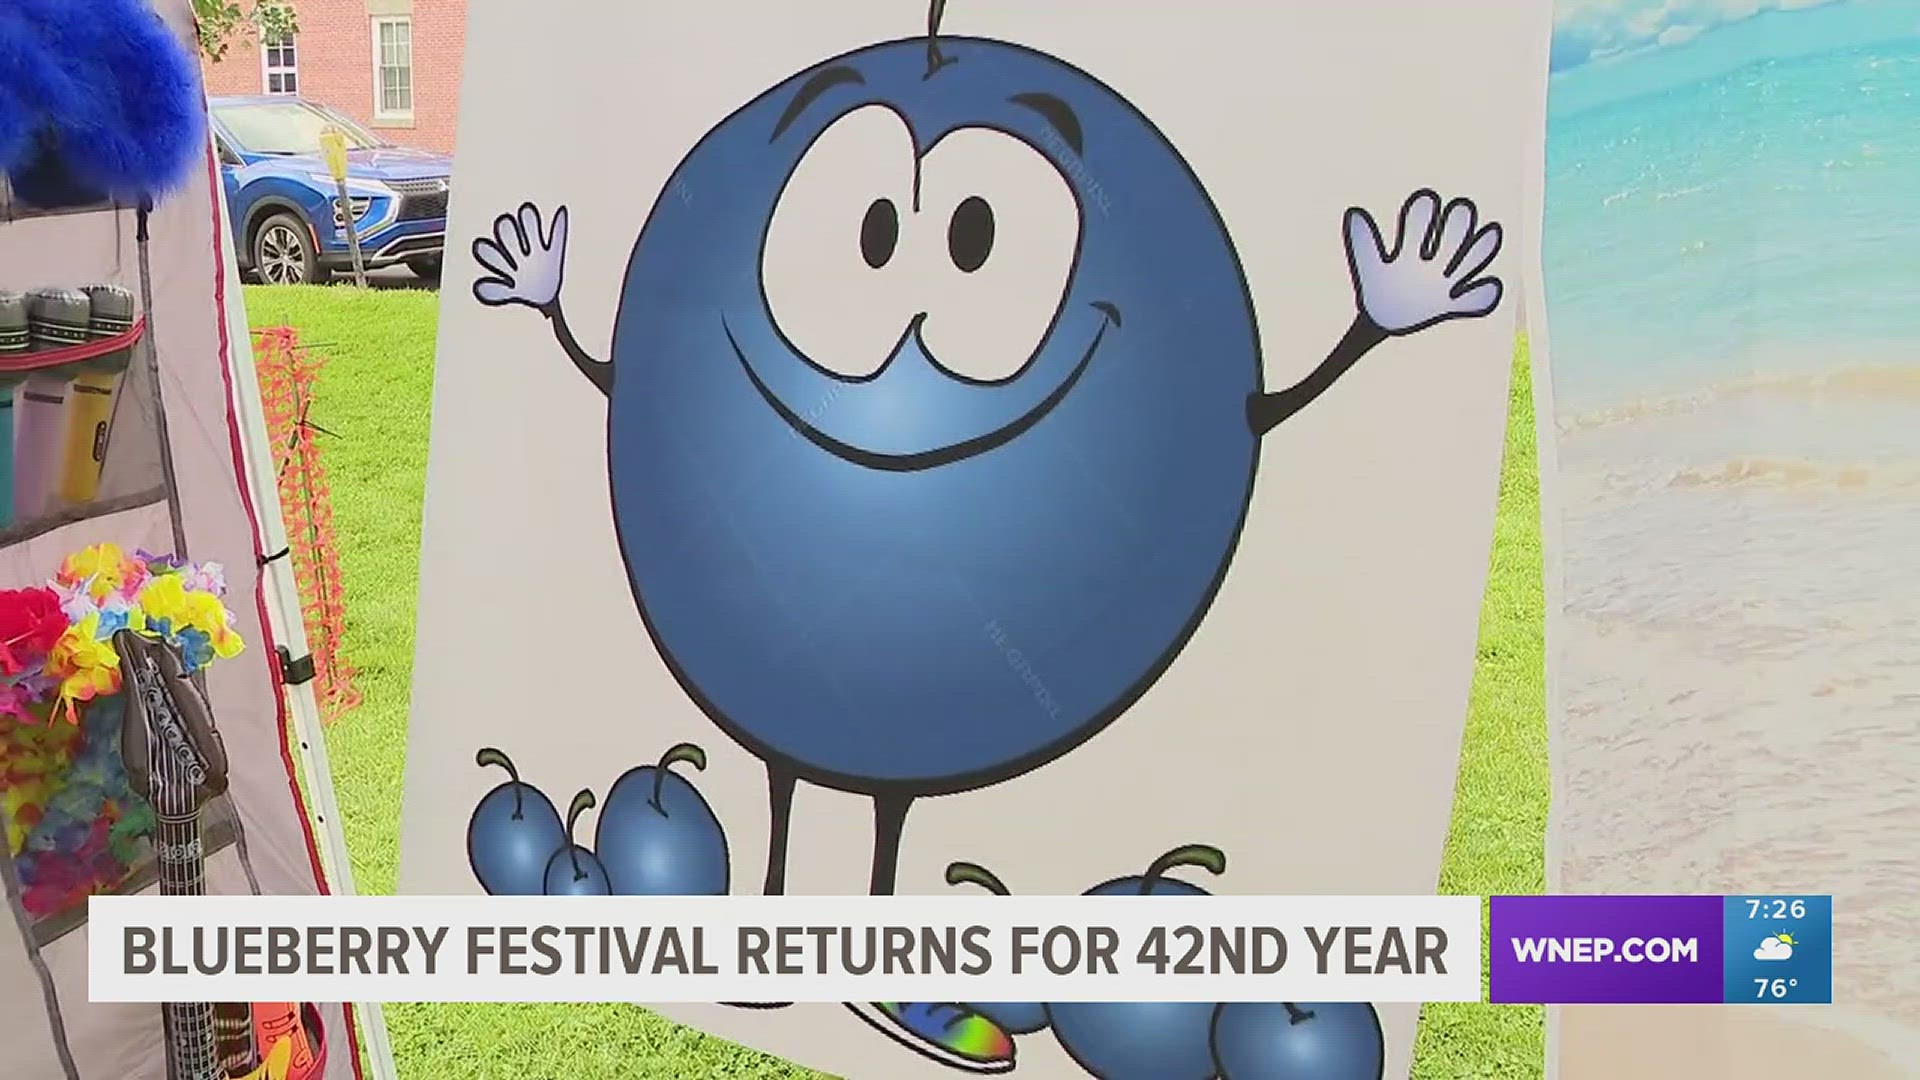 Blueberry festival returns to Susquehanna County